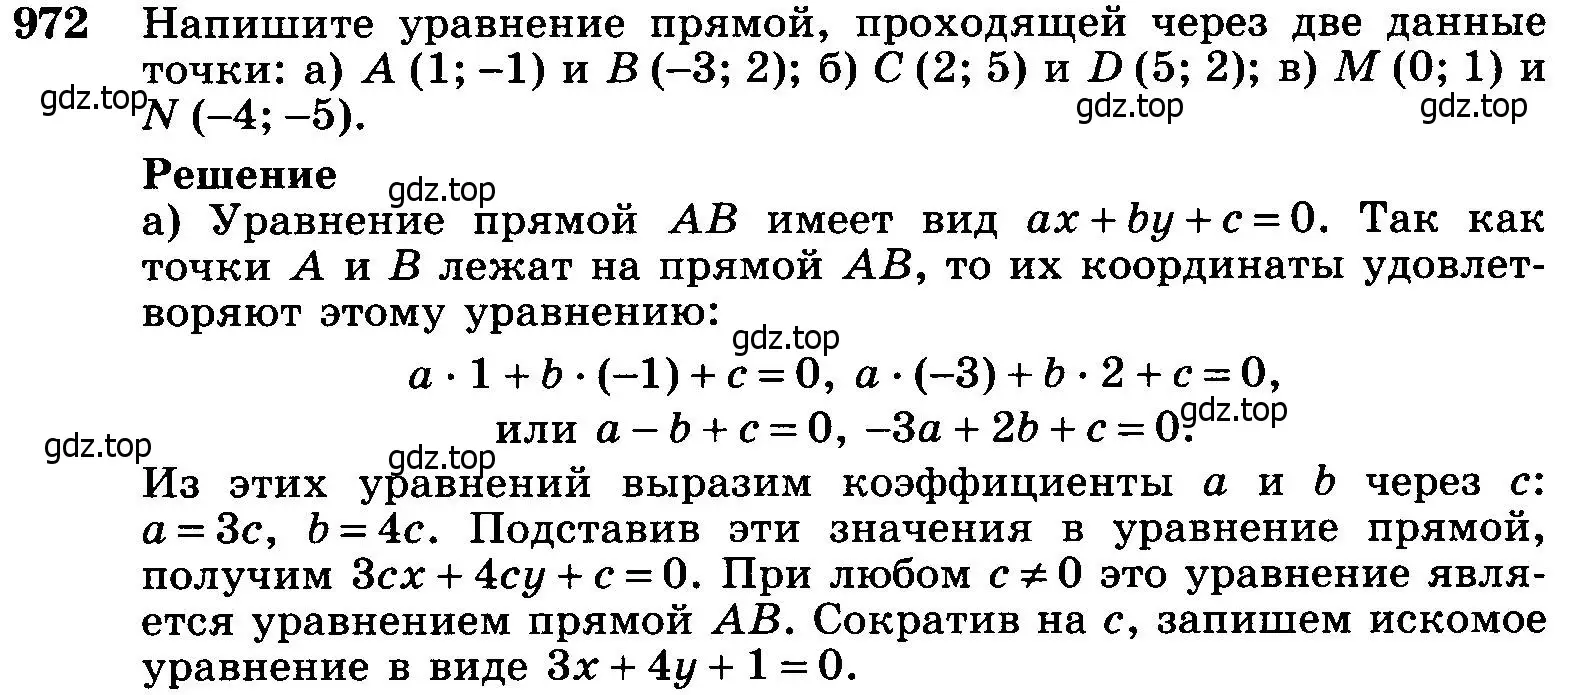 Условие номер 972 (страница 241) гдз по геометрии 7-9 класс Атанасян, Бутузов, учебник